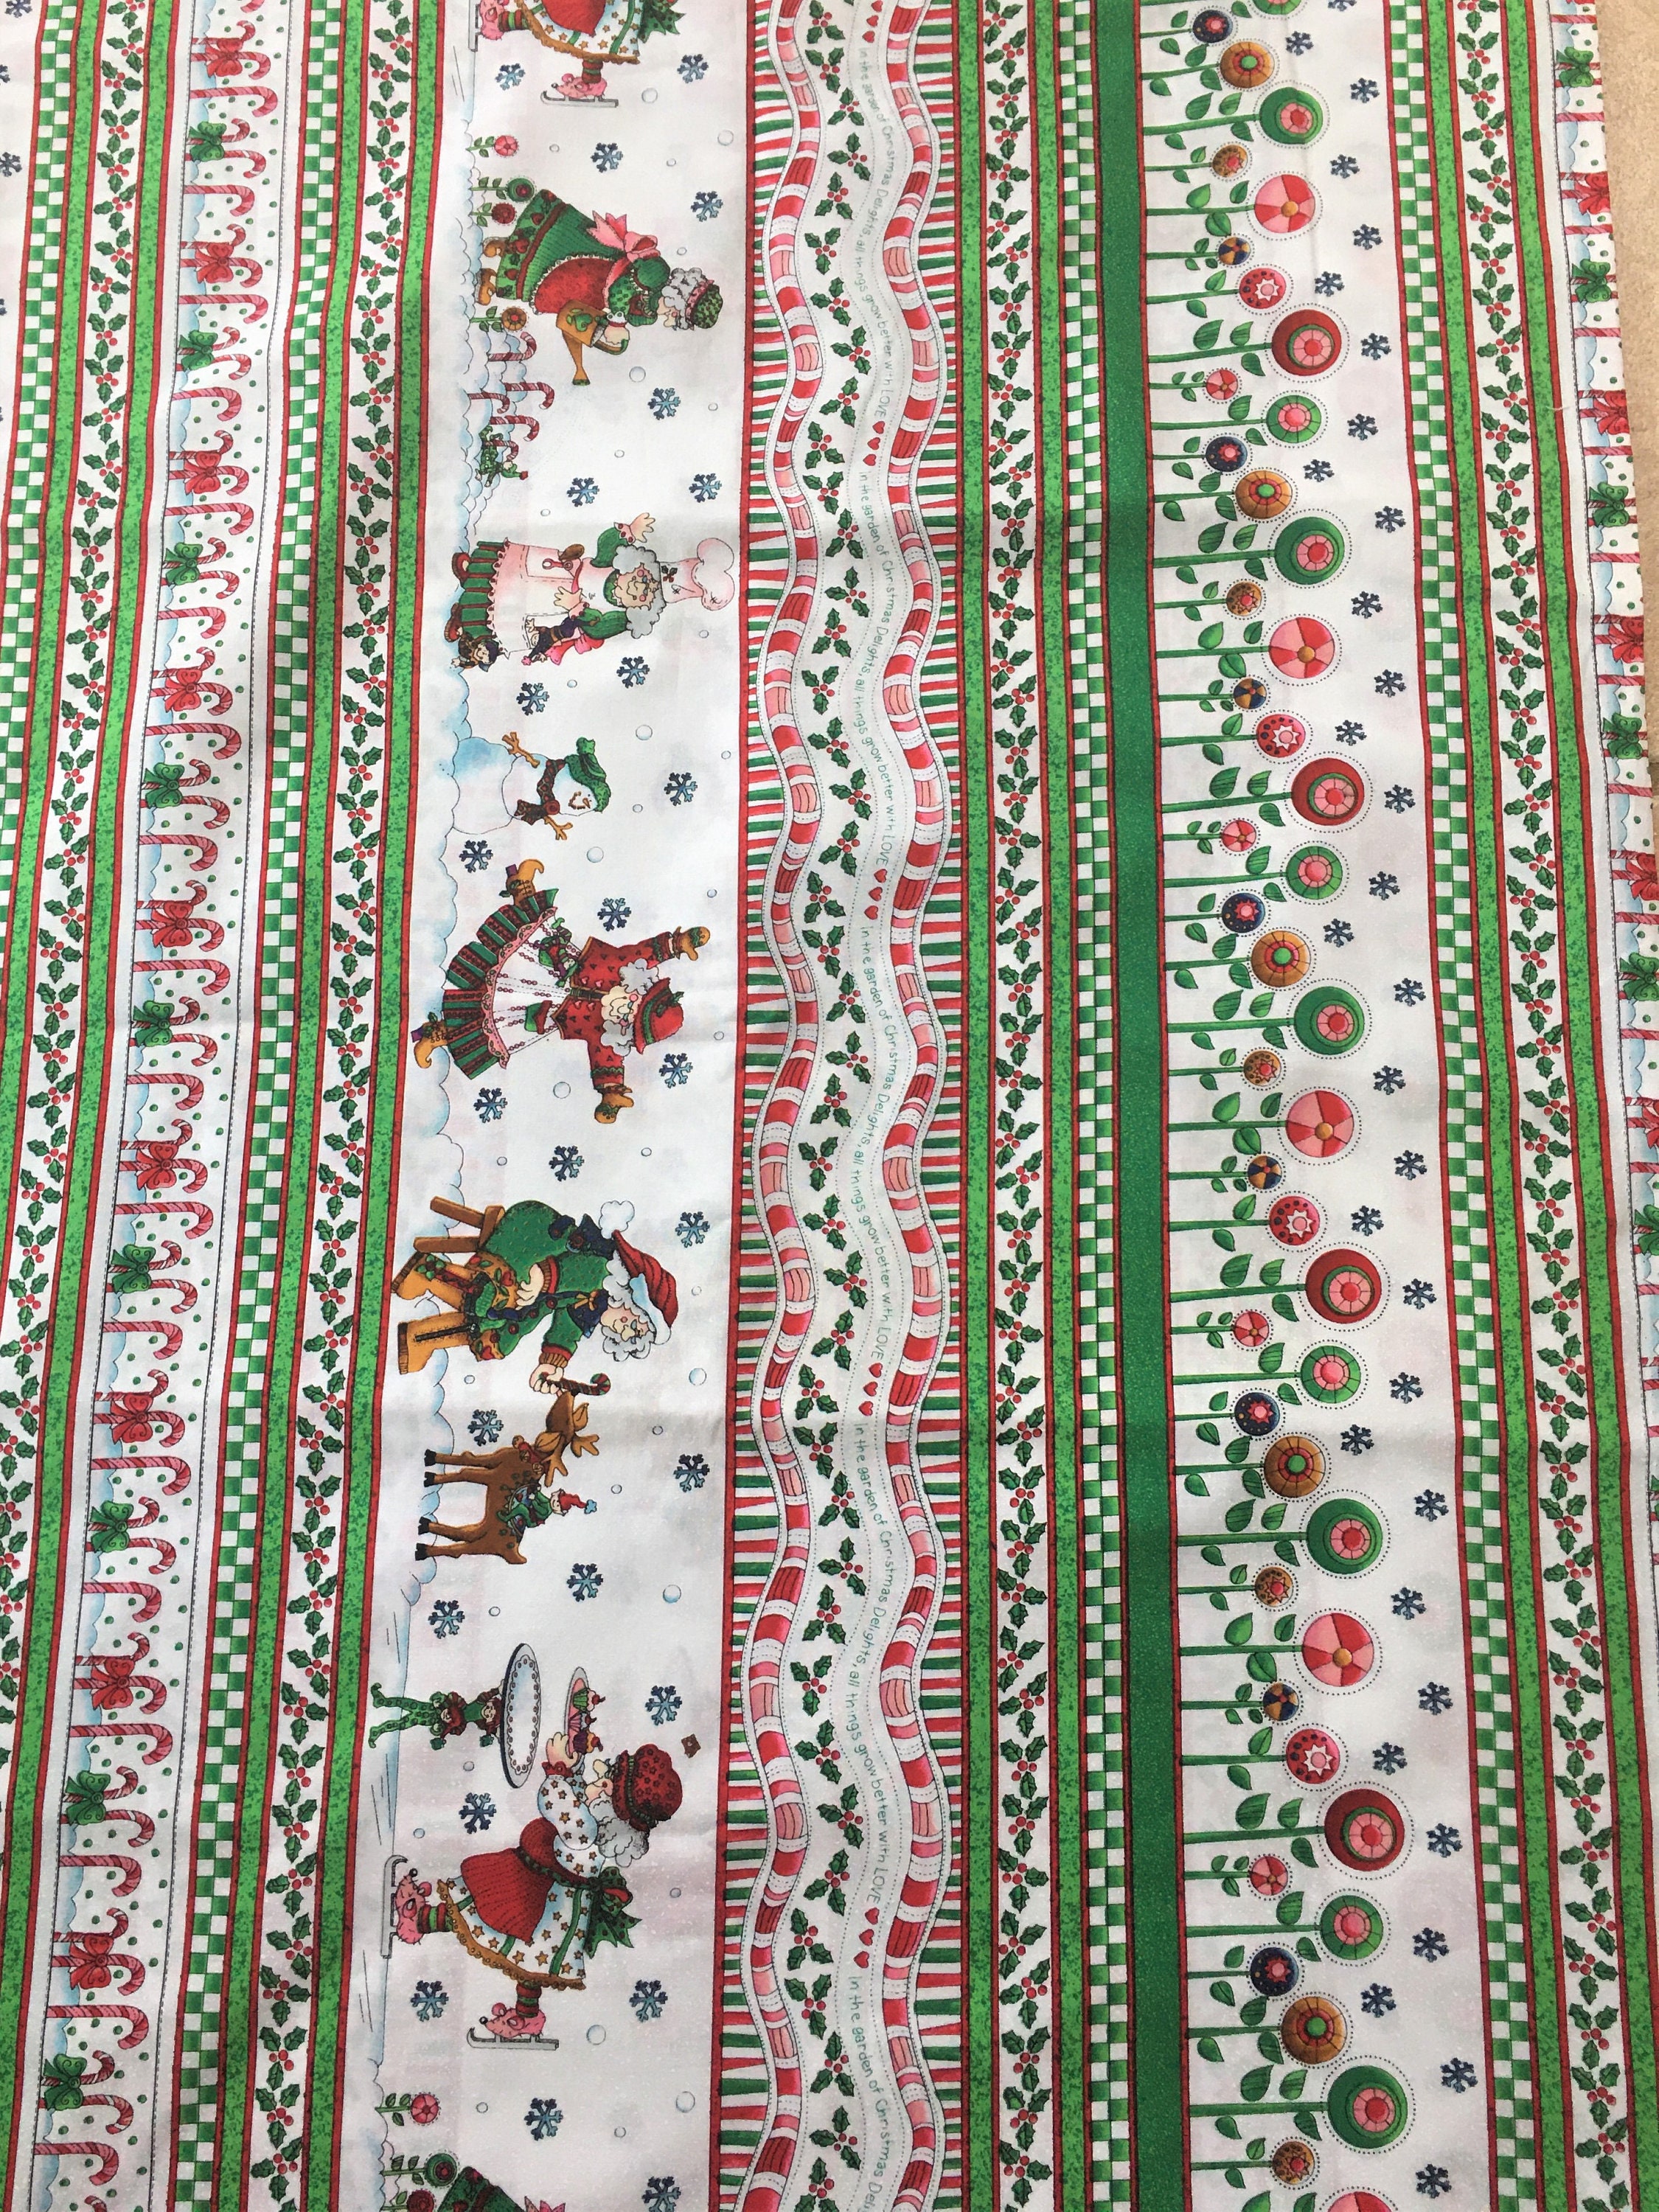 Possibilities Whimsical Christmas Fabric Nancy J Smith & | Etsy